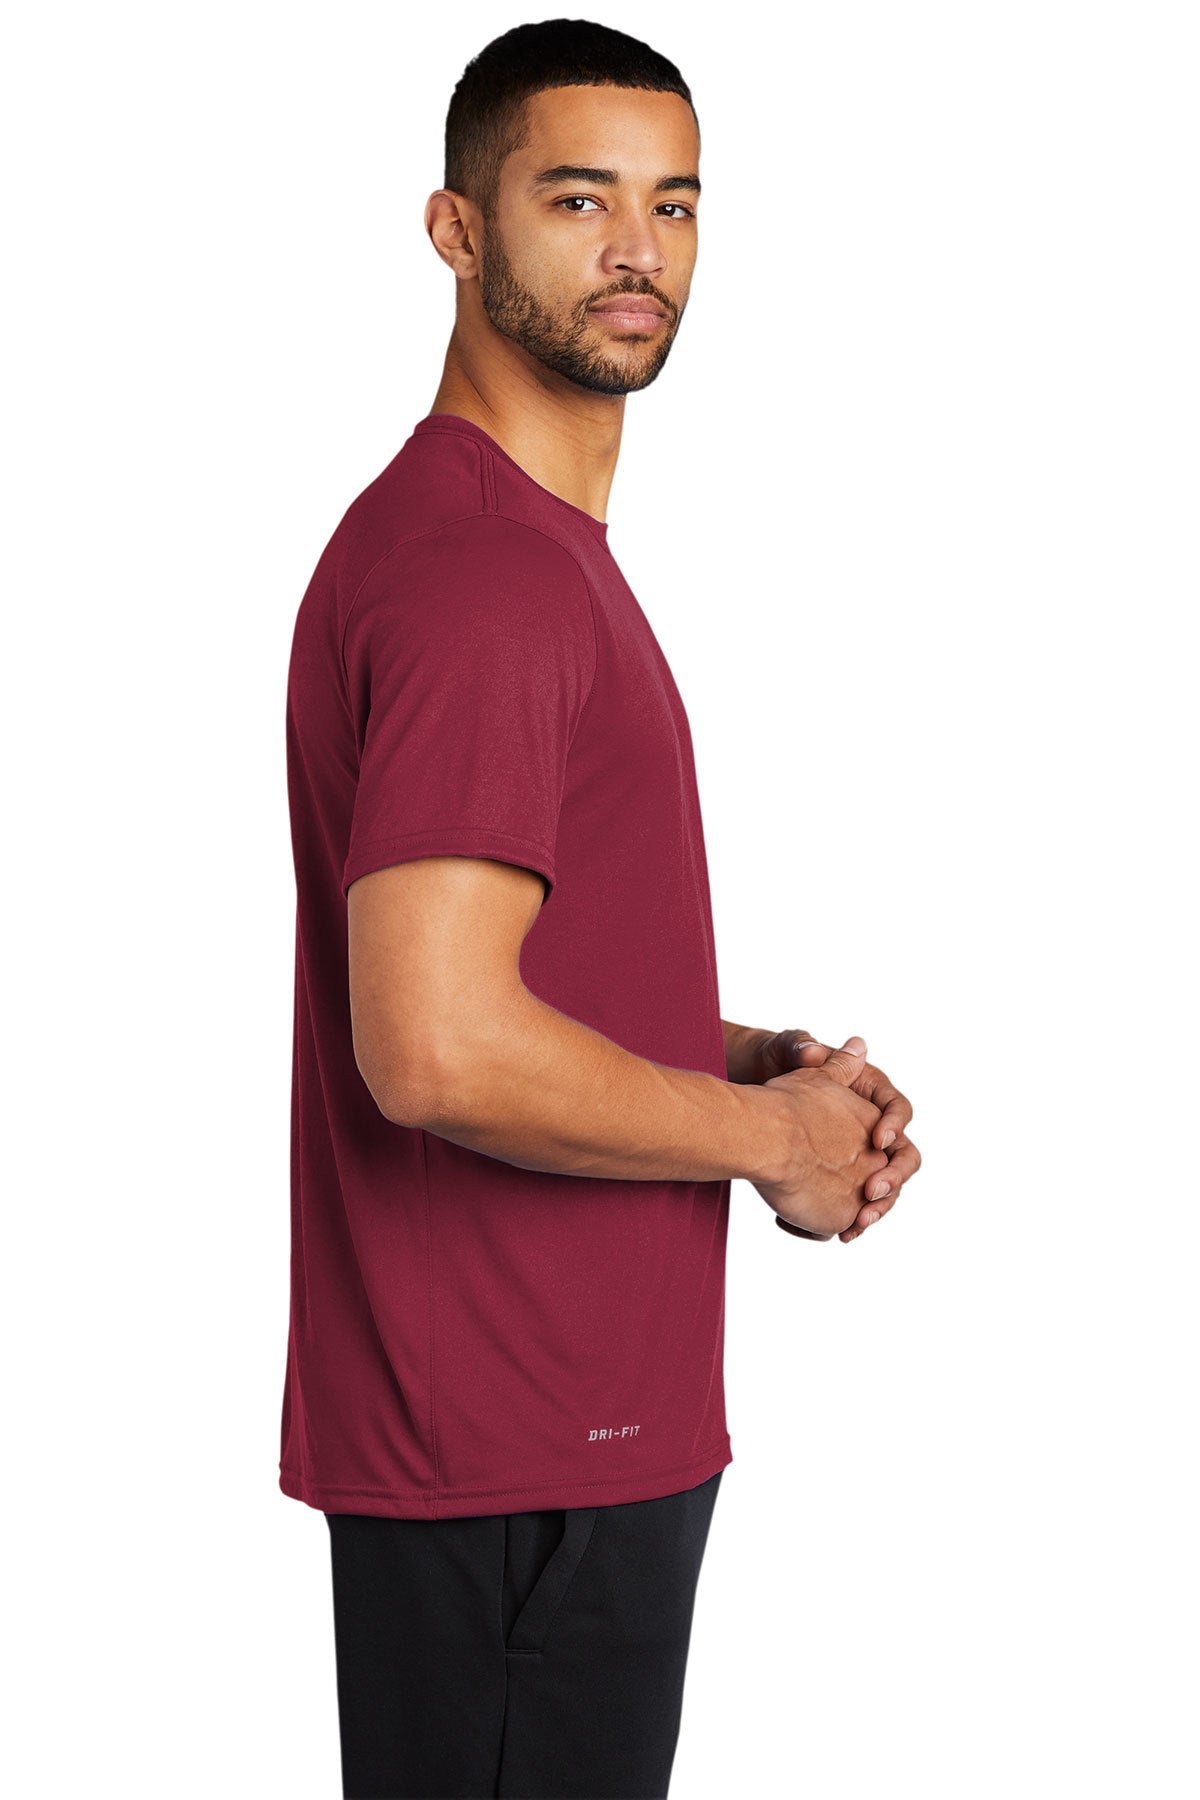 Nike Legend Customized T-Shirts, Team Maroon